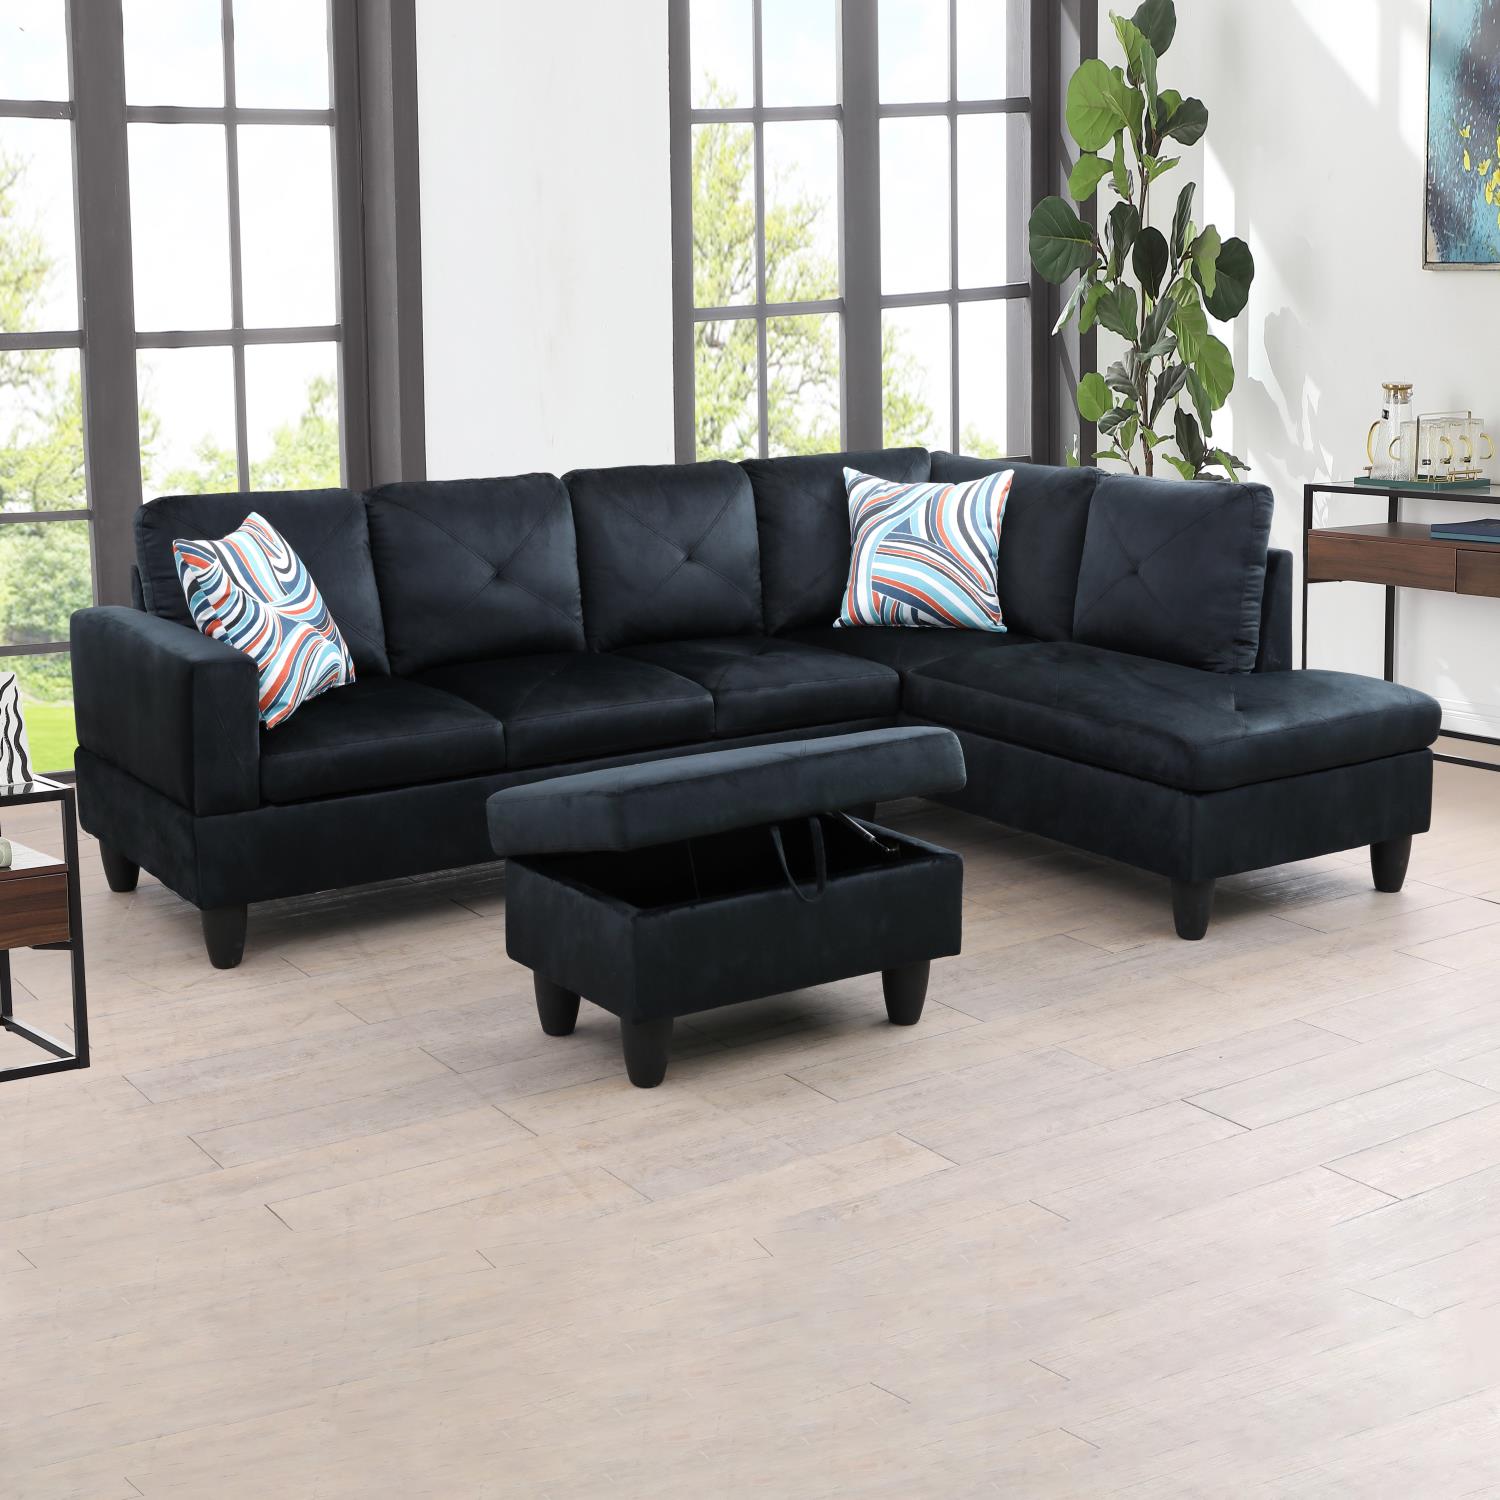 Ainehome Black L-Shaped Microfiber Sofa Set